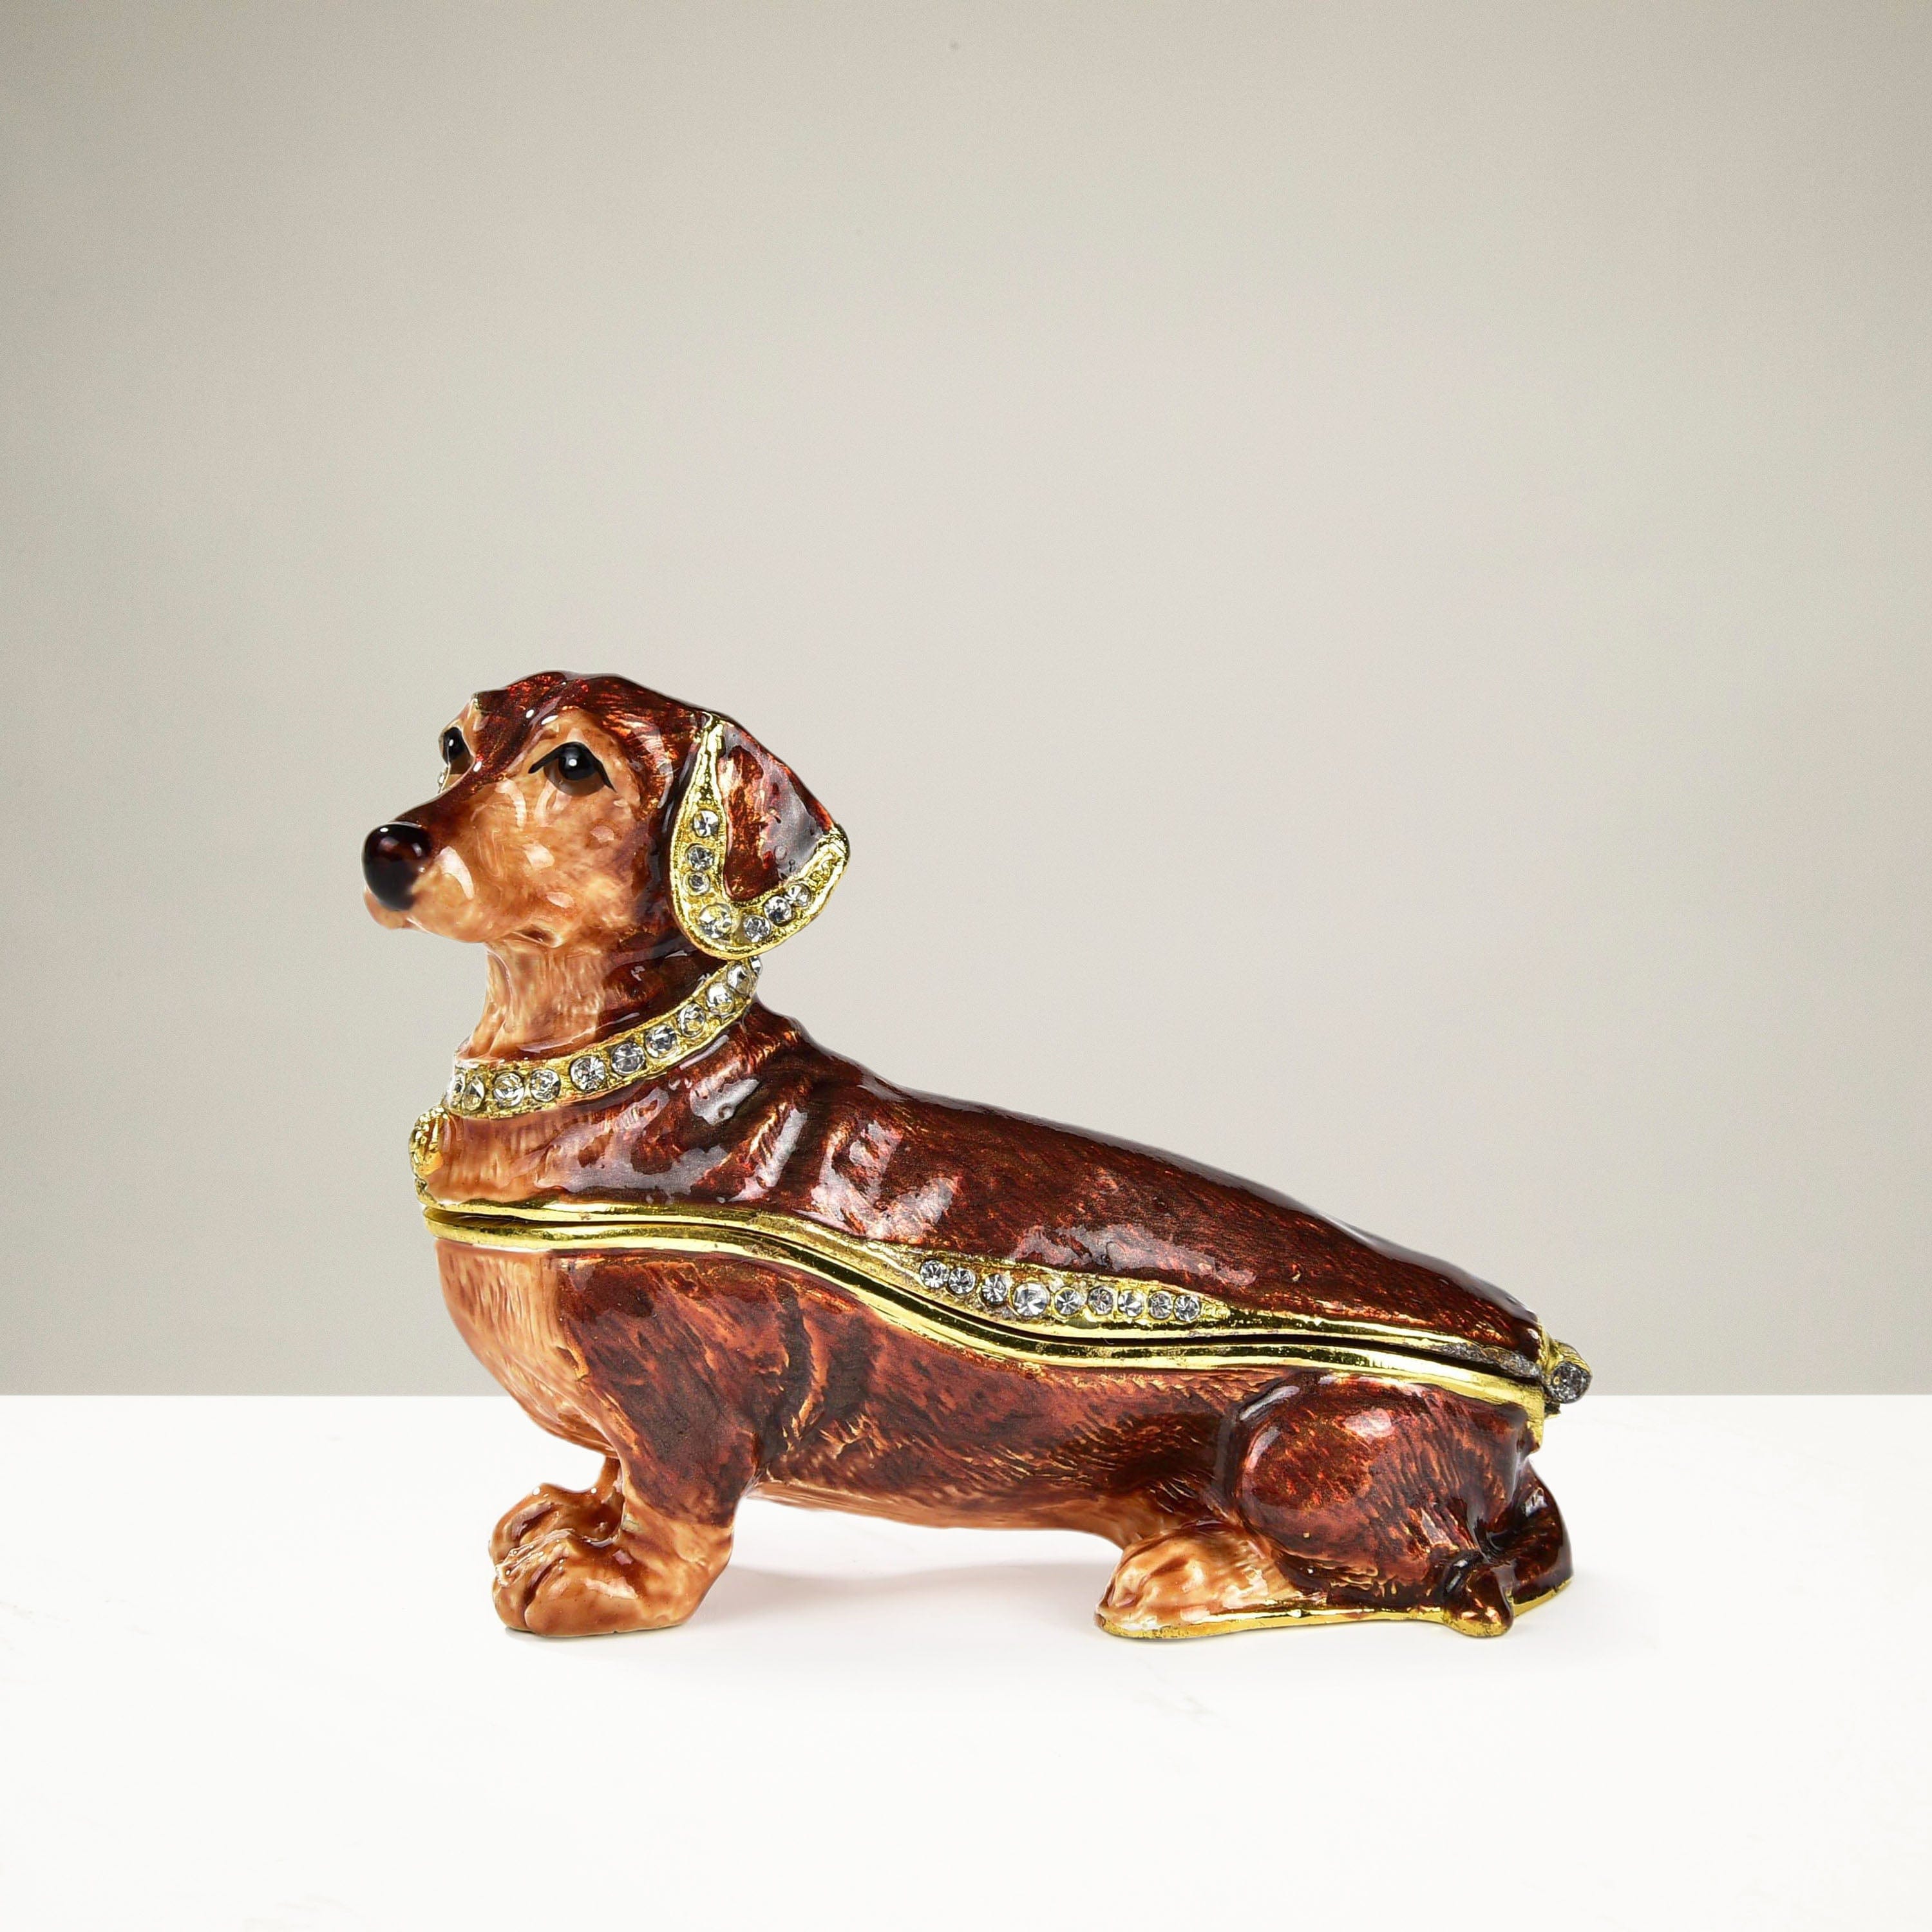 Kalifano Vanity Figurine Dauchshund Weiner Dog Figurine Keepsake Box made with Crystals SVA-060